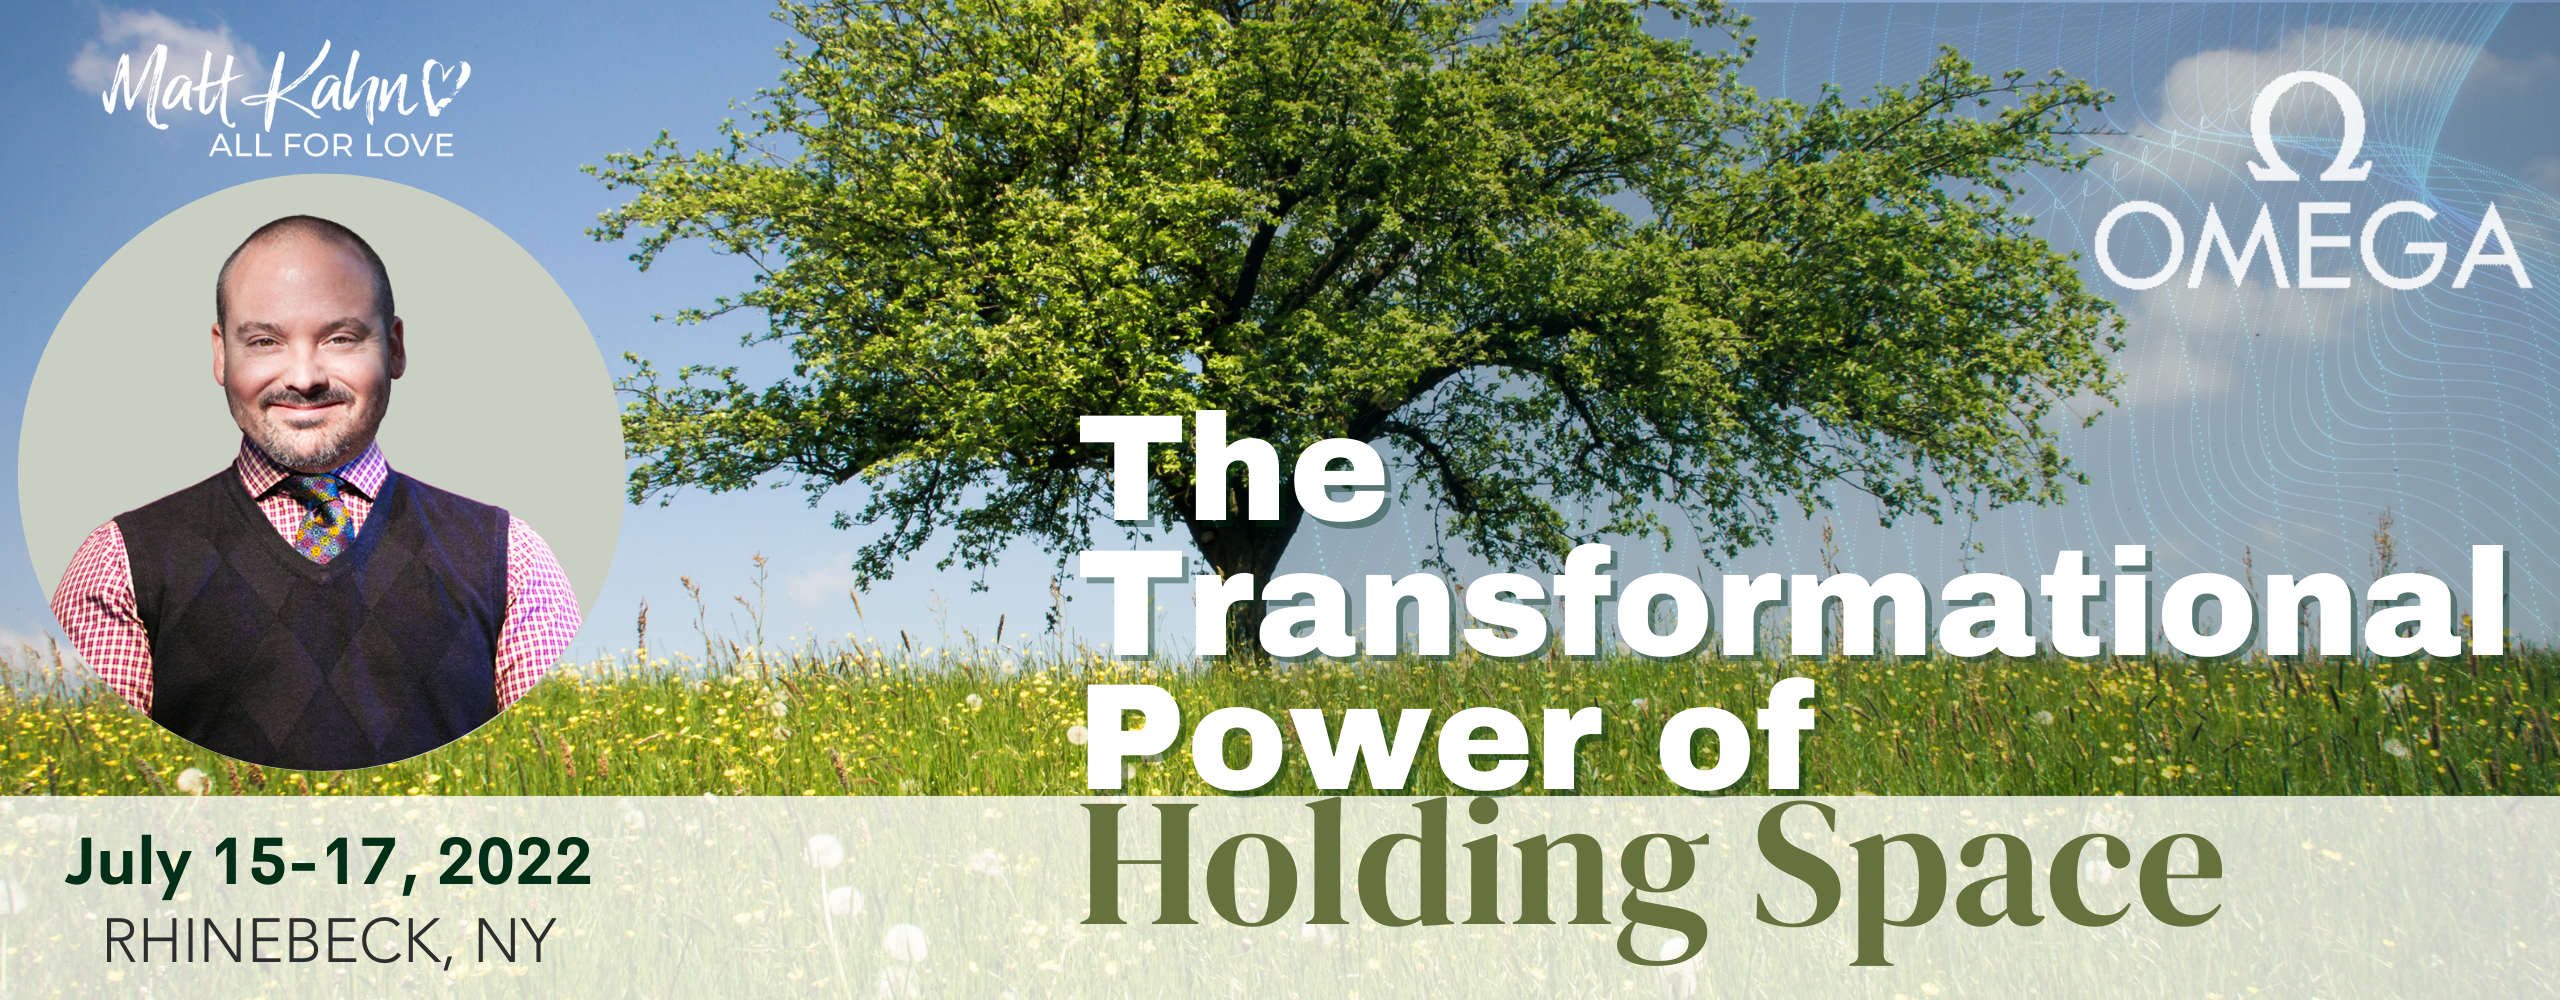 The Transformational Power of Holding Space - Matt Kahn - Omega Institute